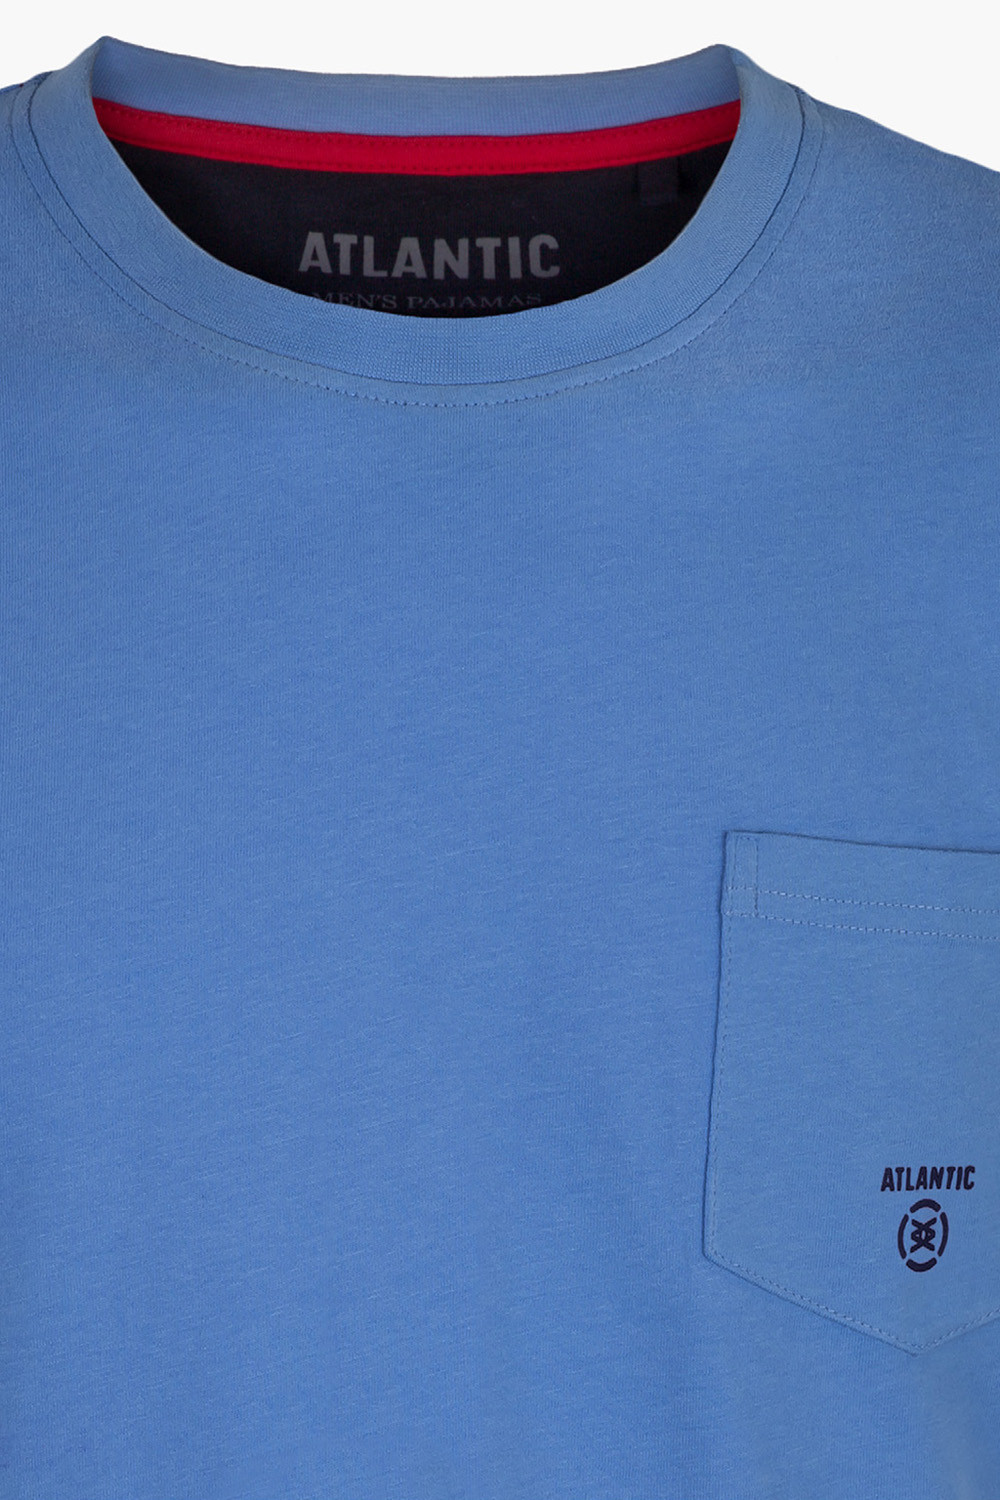 Atlantic NMP-362 kolor:niebieski 2XL